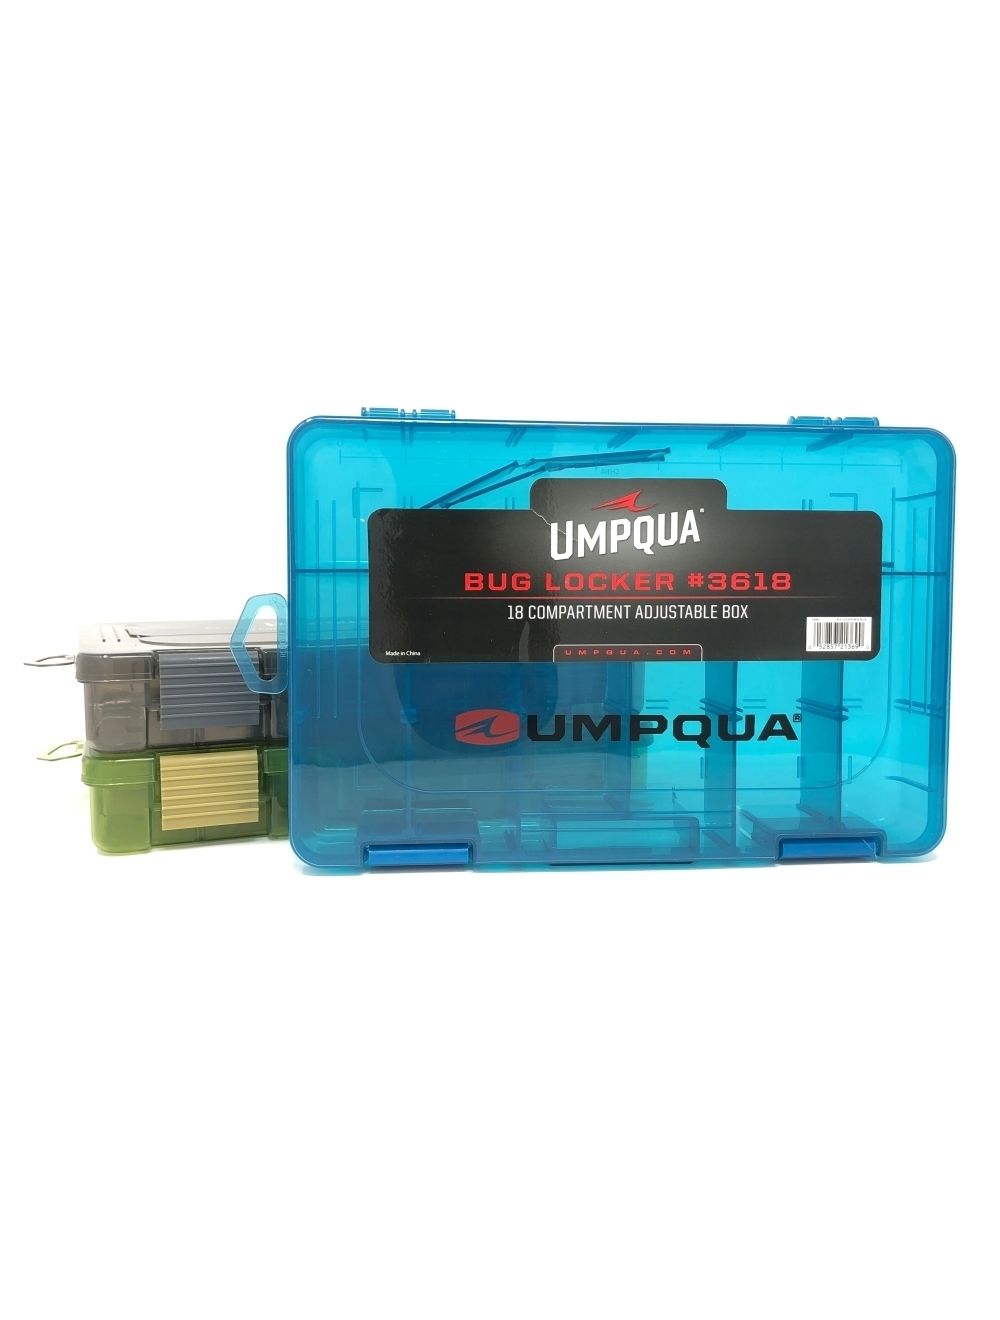 Umpqua Bug Locker - 3412, Blue